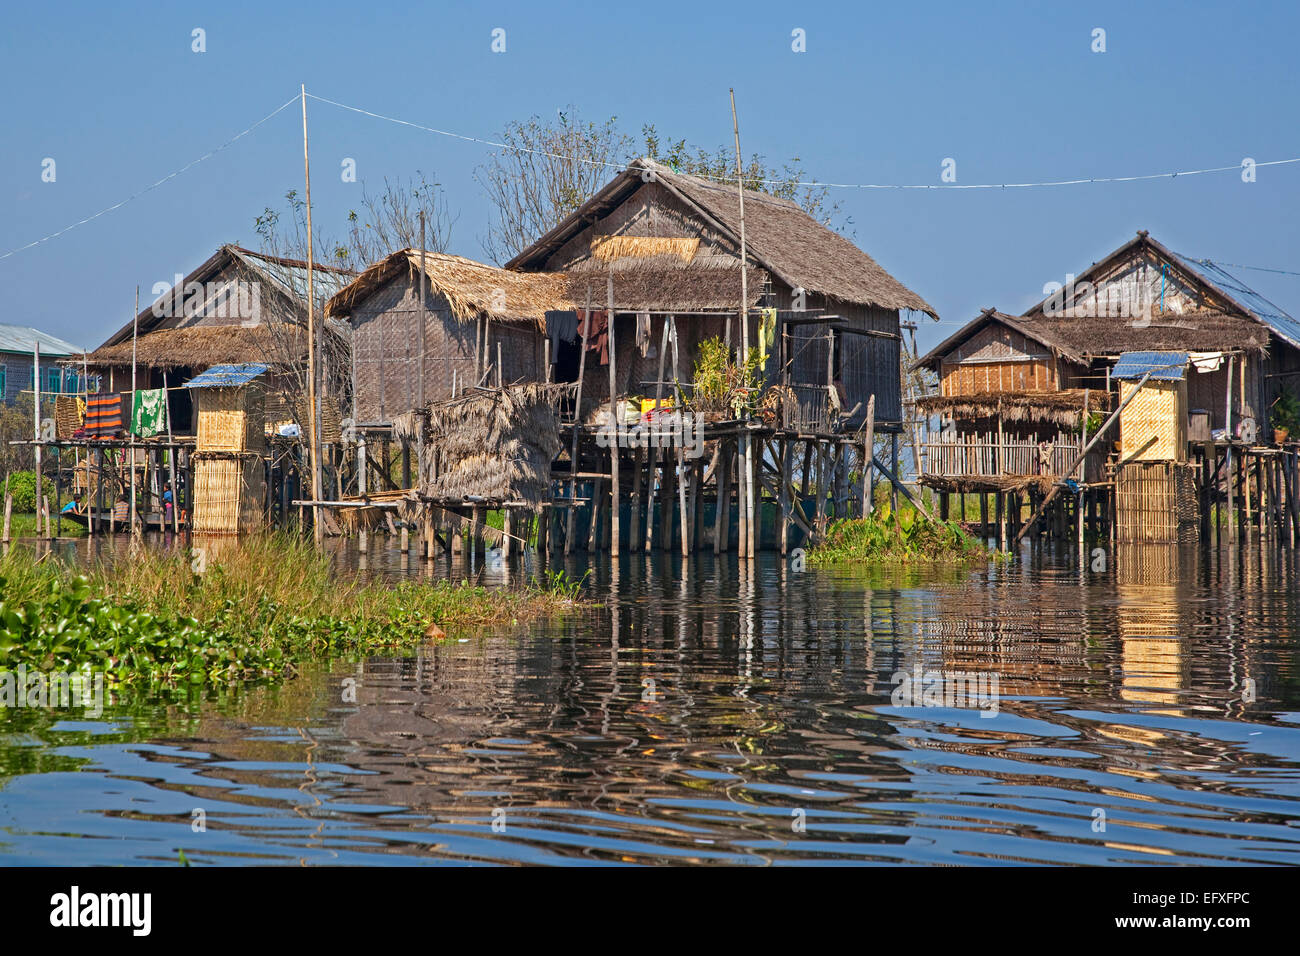 Intha borgo lacuale con bambù tradizionali case su palafitte in Lago Inle, Nyaungshwe, Stato Shan, Myanmar / Birmania Foto Stock